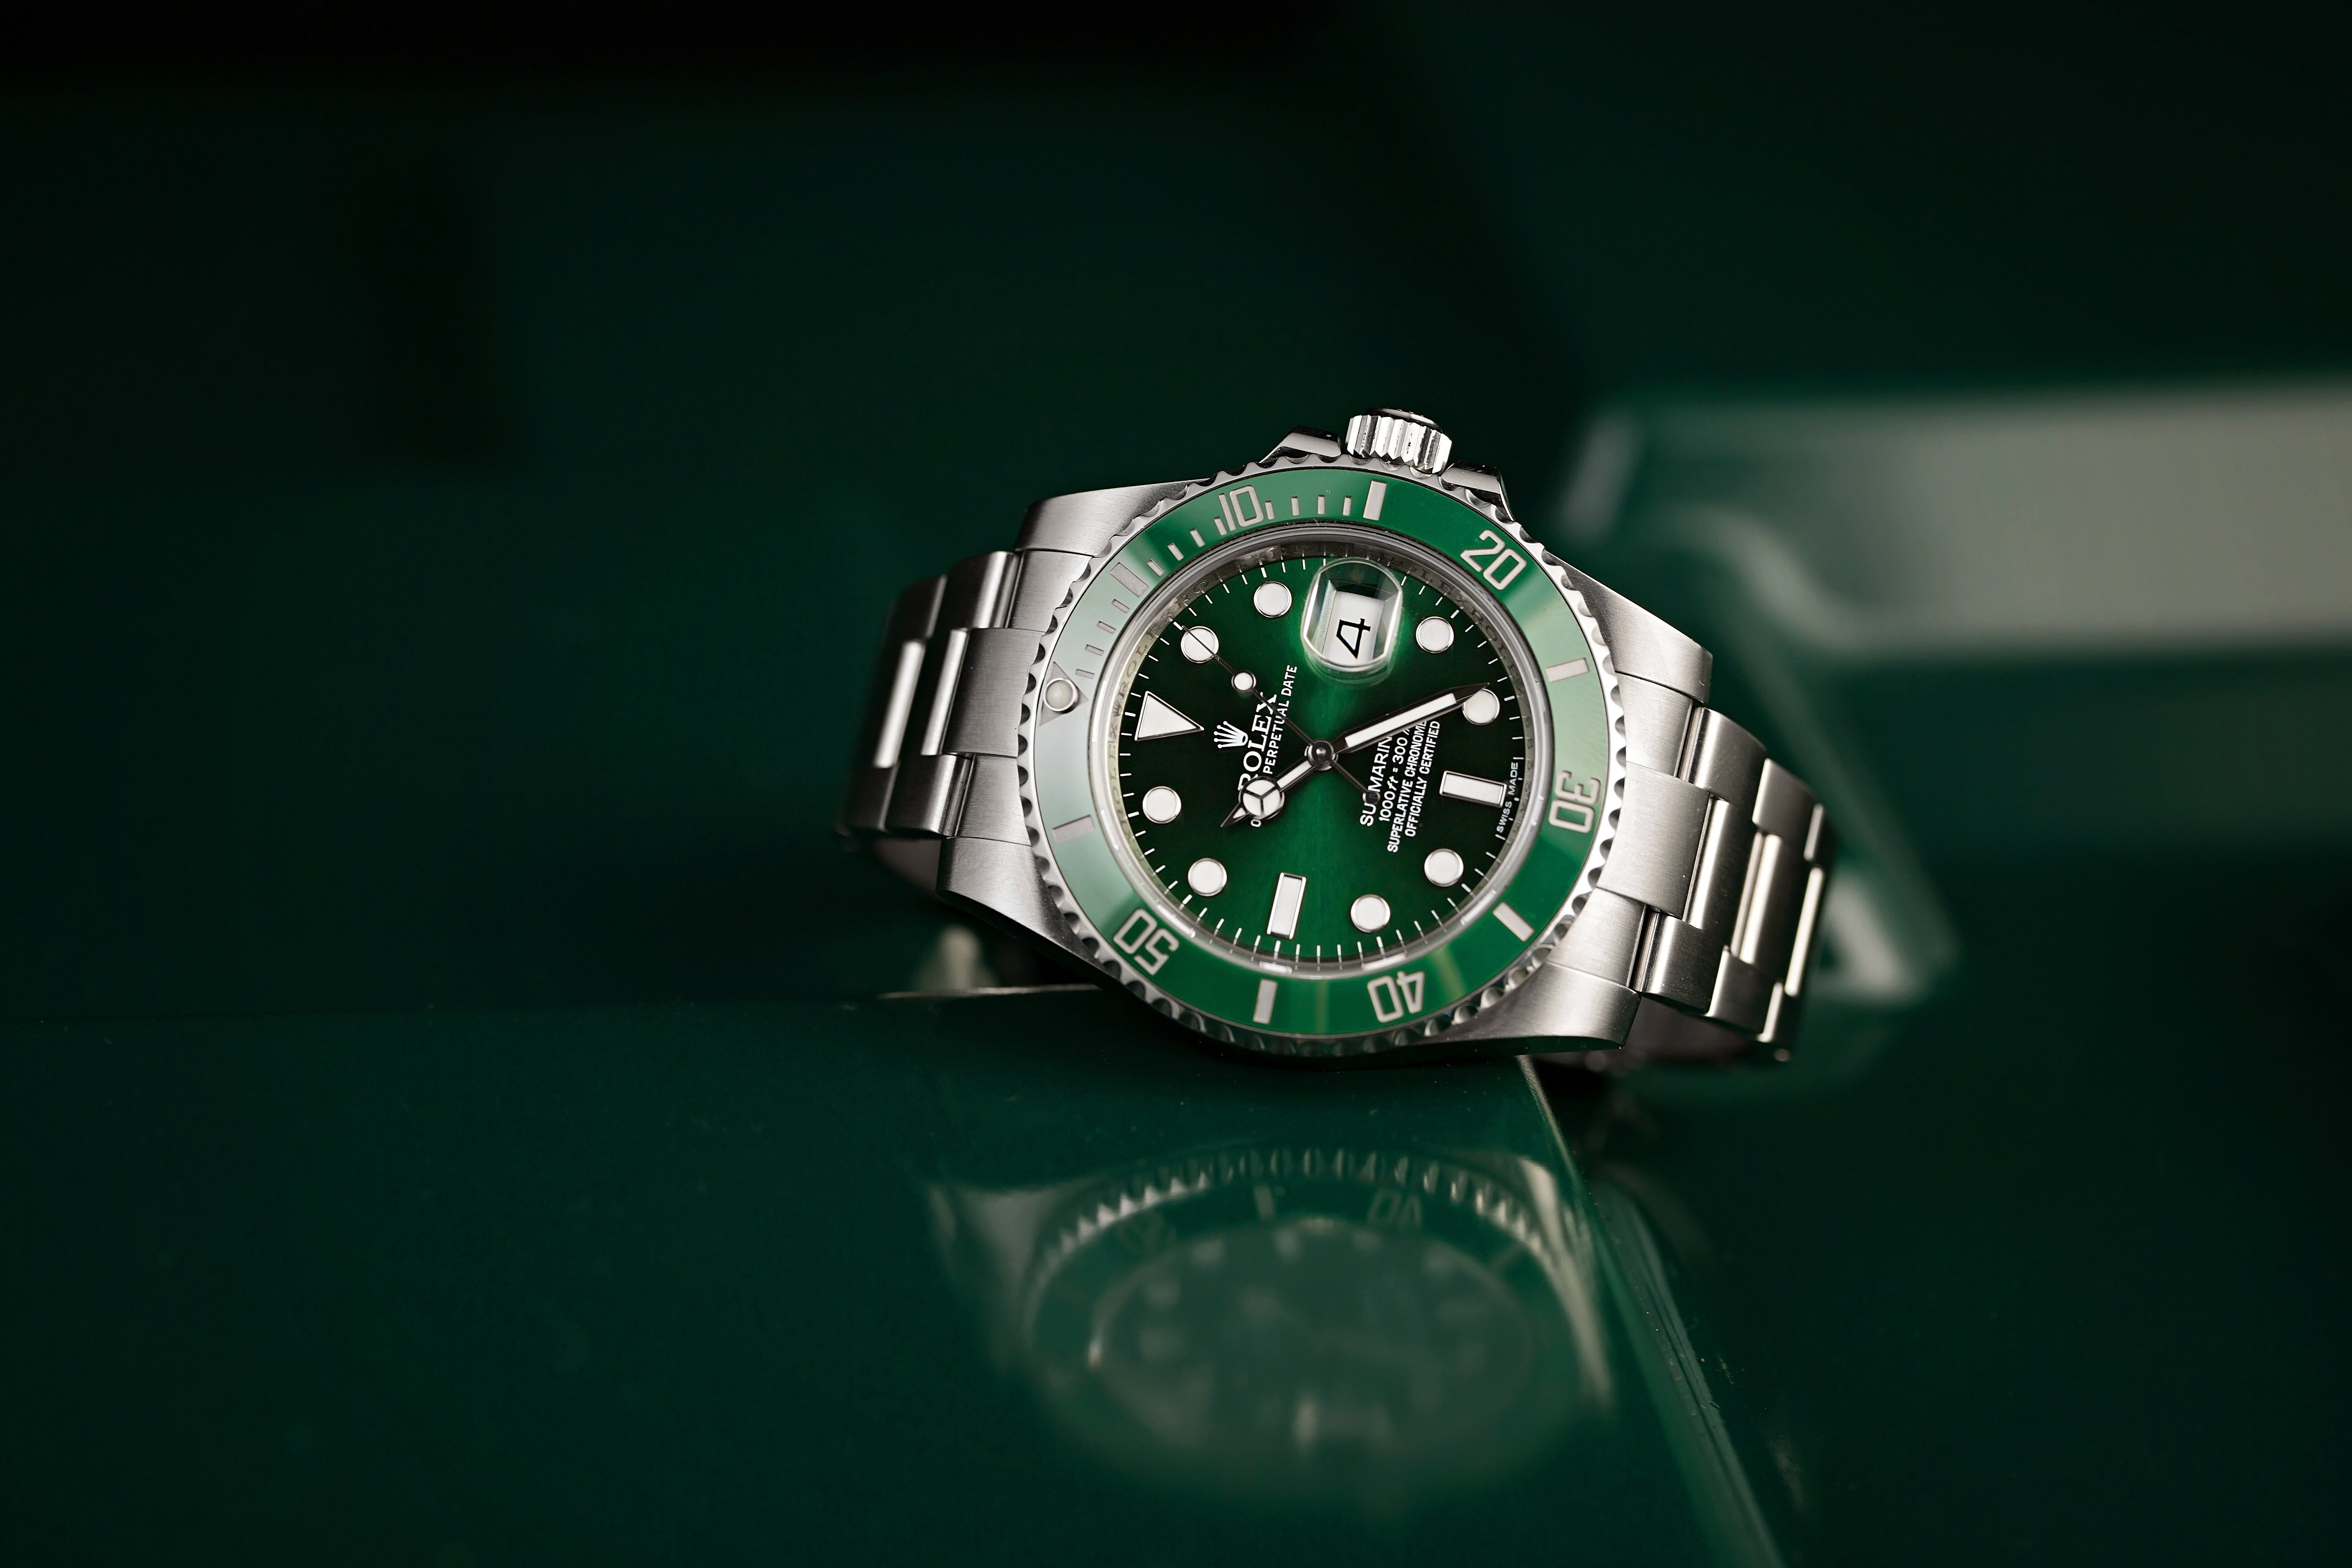 Rolex Submariner Green Case Wristwatches for sale